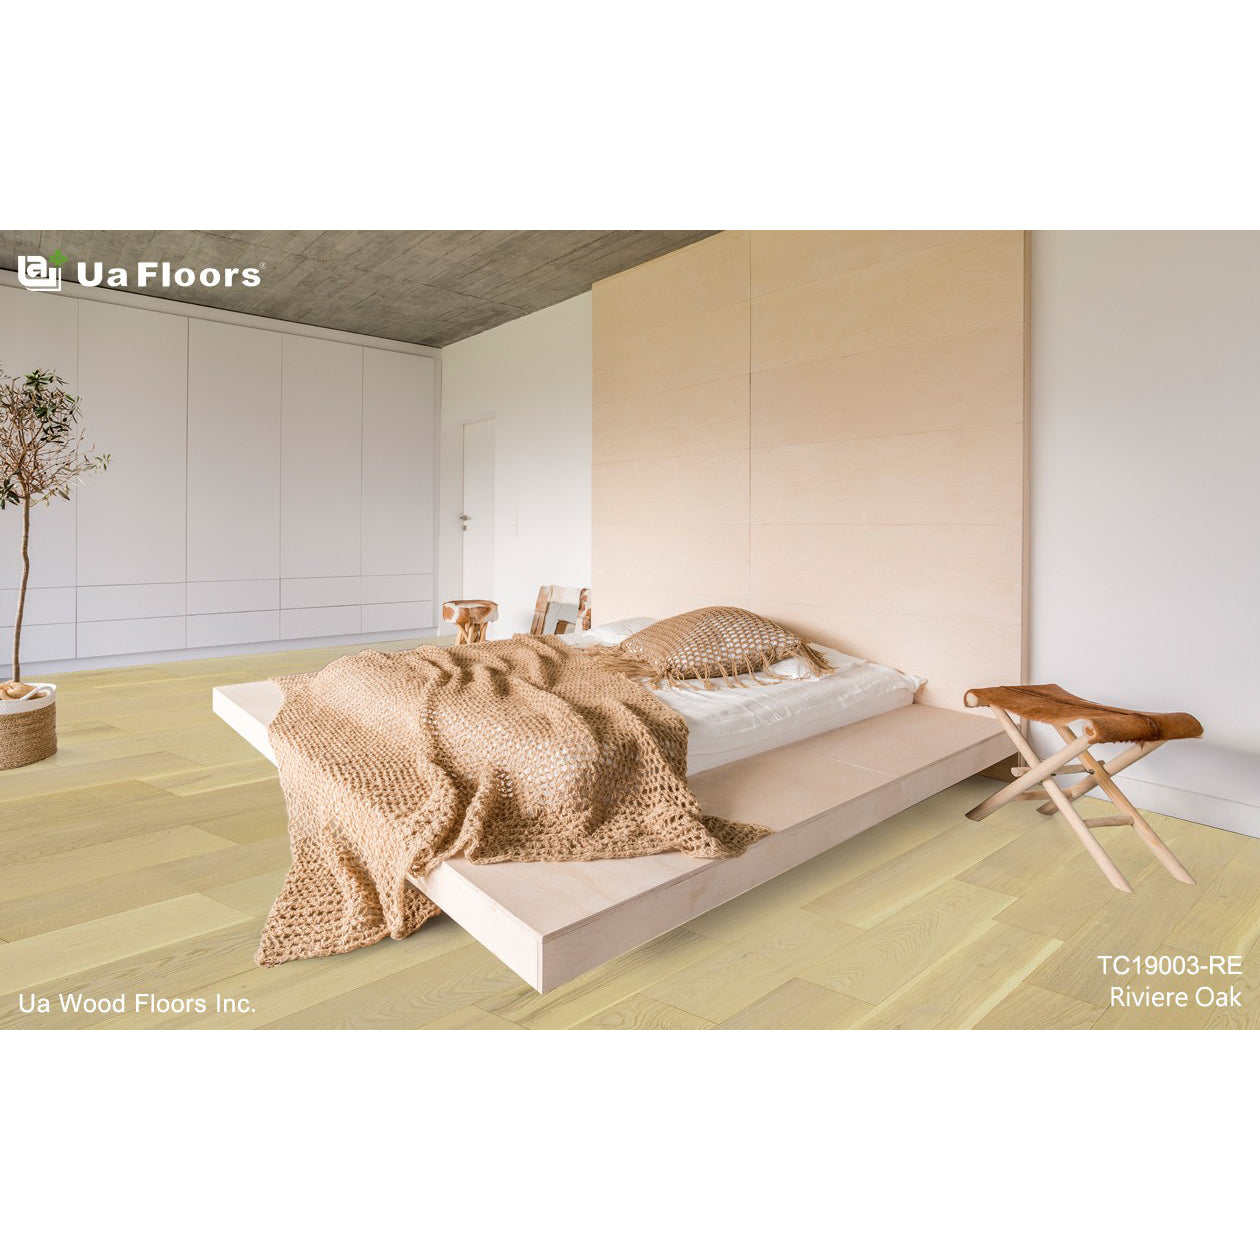 Ua Floors - Classics Collection - Riviere Euro Oak